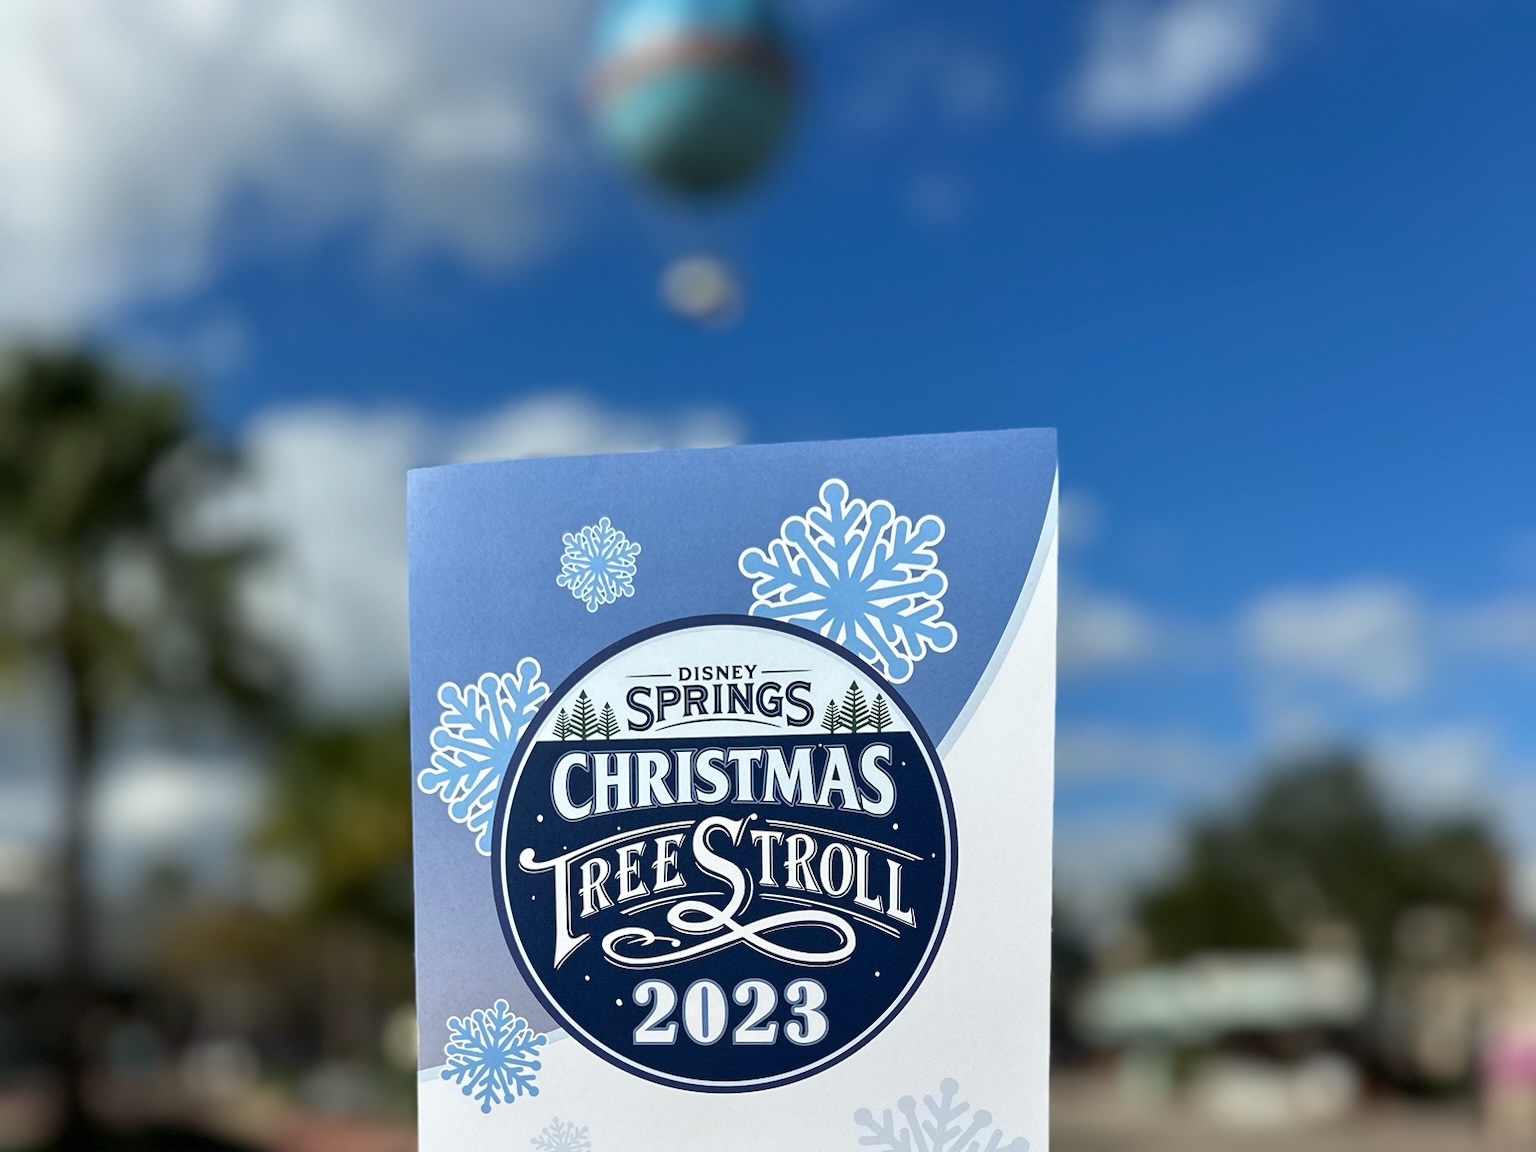 The Christmas Tree Stroll